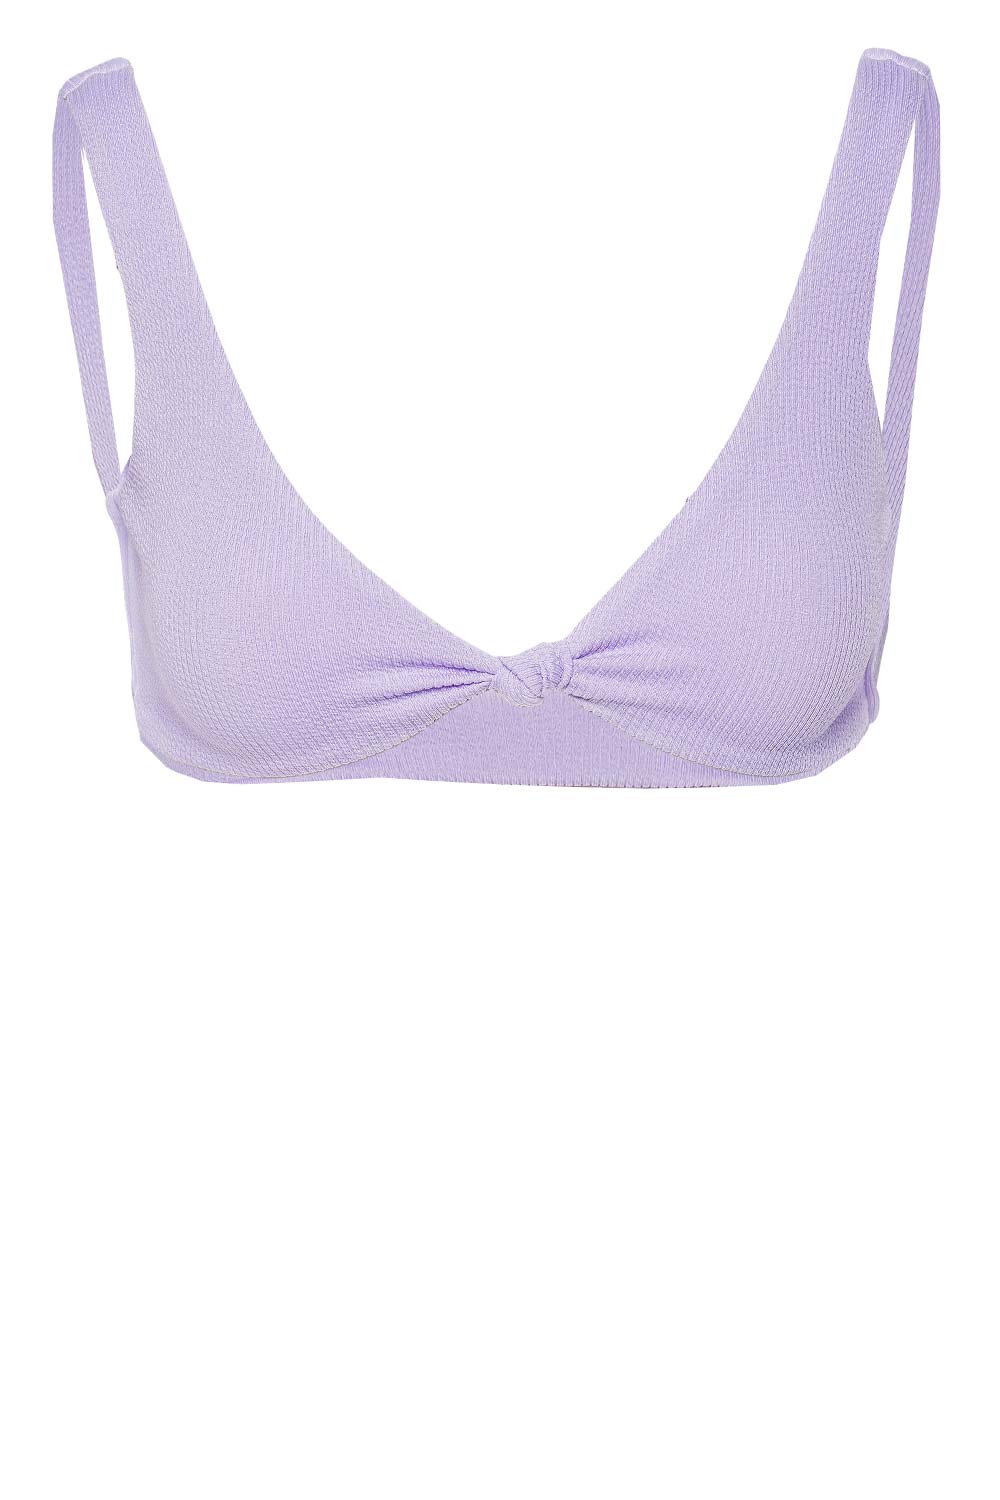 Melissa Odabash Ibiza Lavender Rib Knit Bikini Top